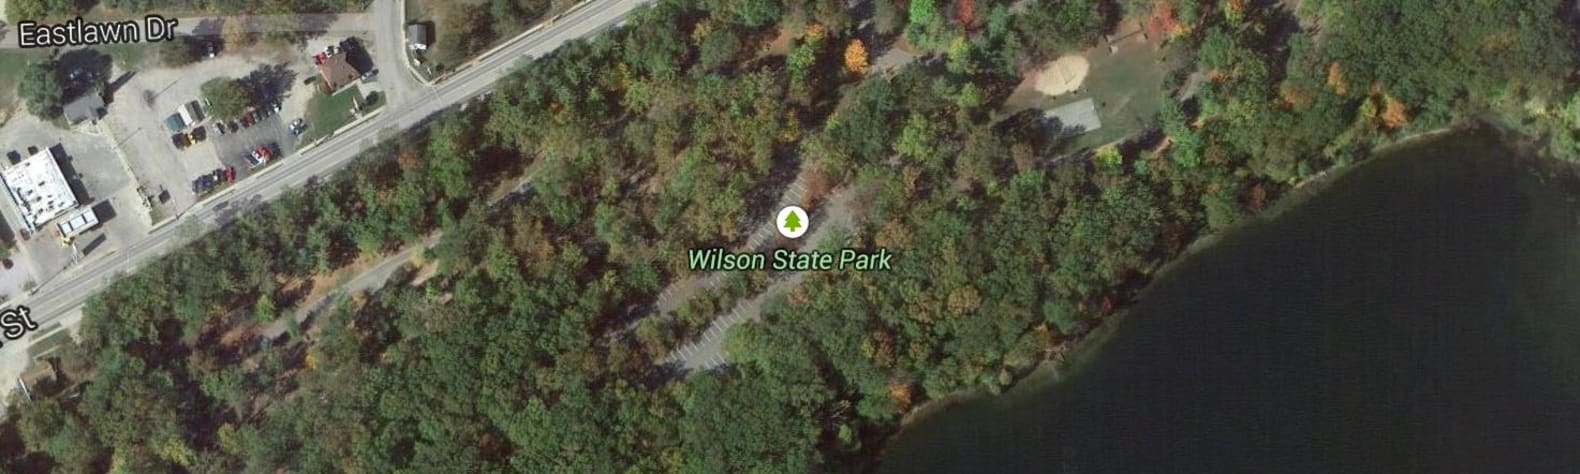 Wilson State Park